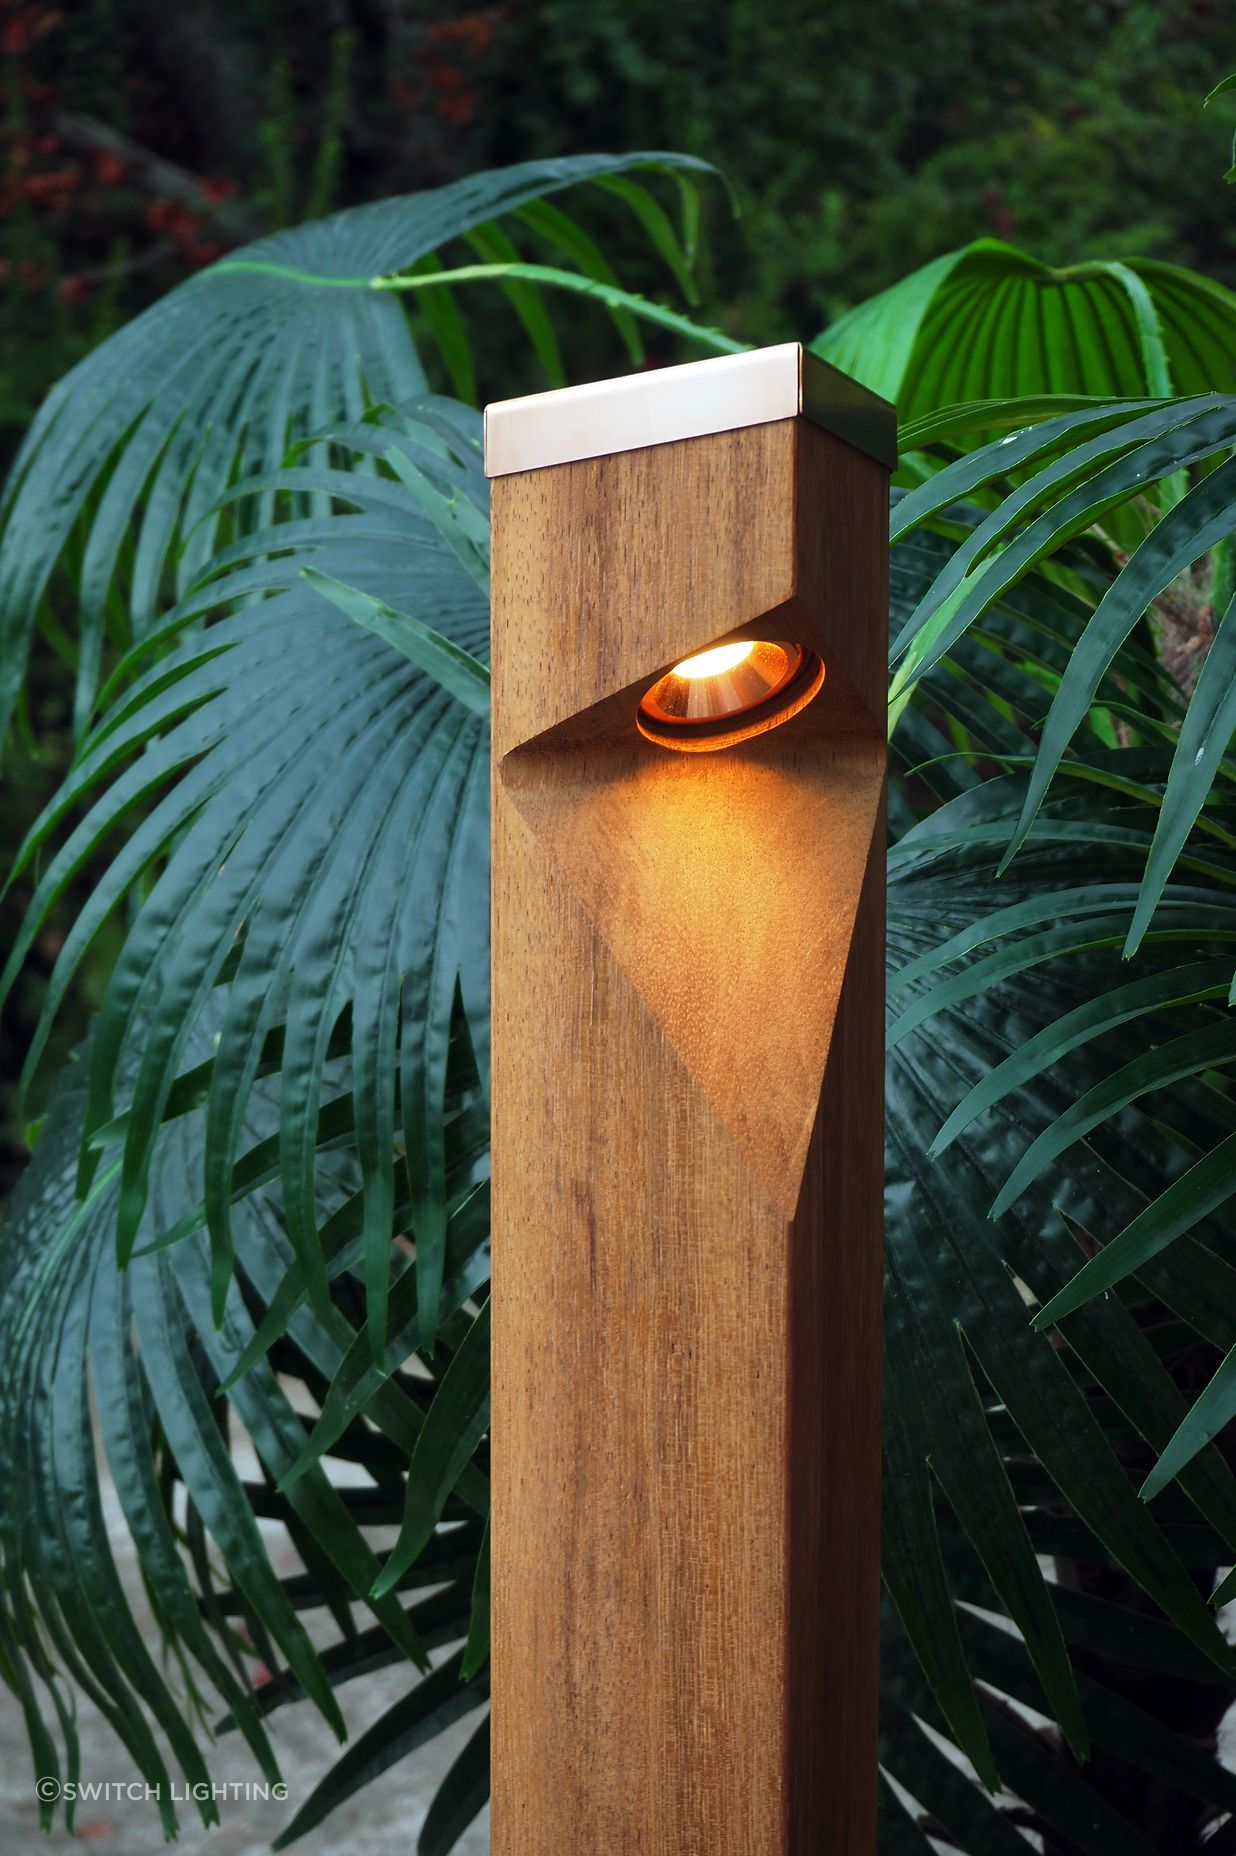 A new range of beautiful hardwood Bollards by Switch Lighting